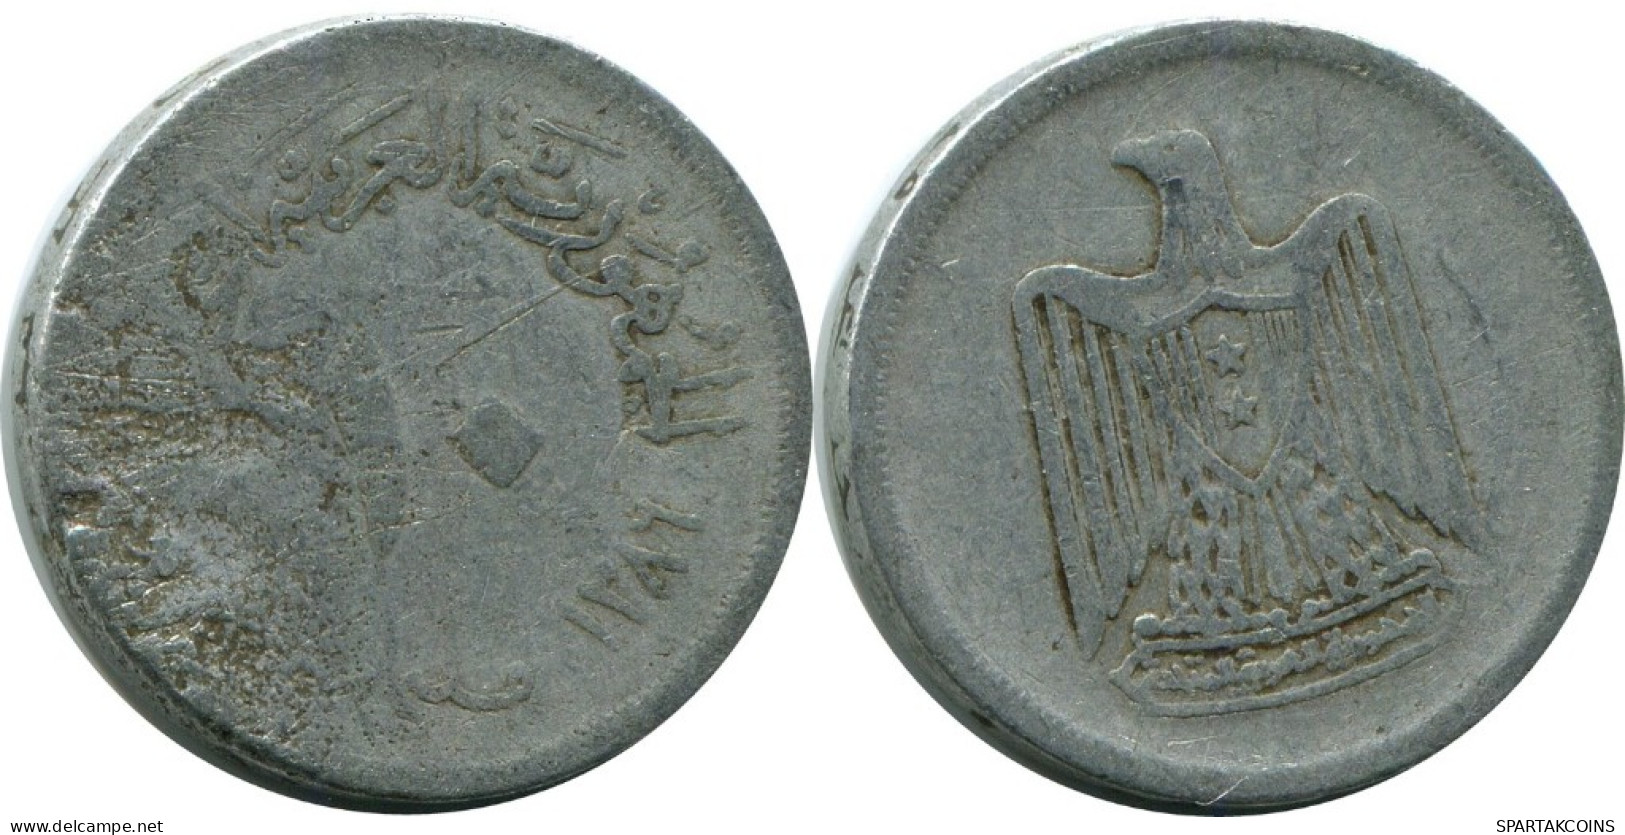 10 MILLIEMES 1967 EGIPTO EGYPT Islámico Moneda #AK169.E.A - Egitto